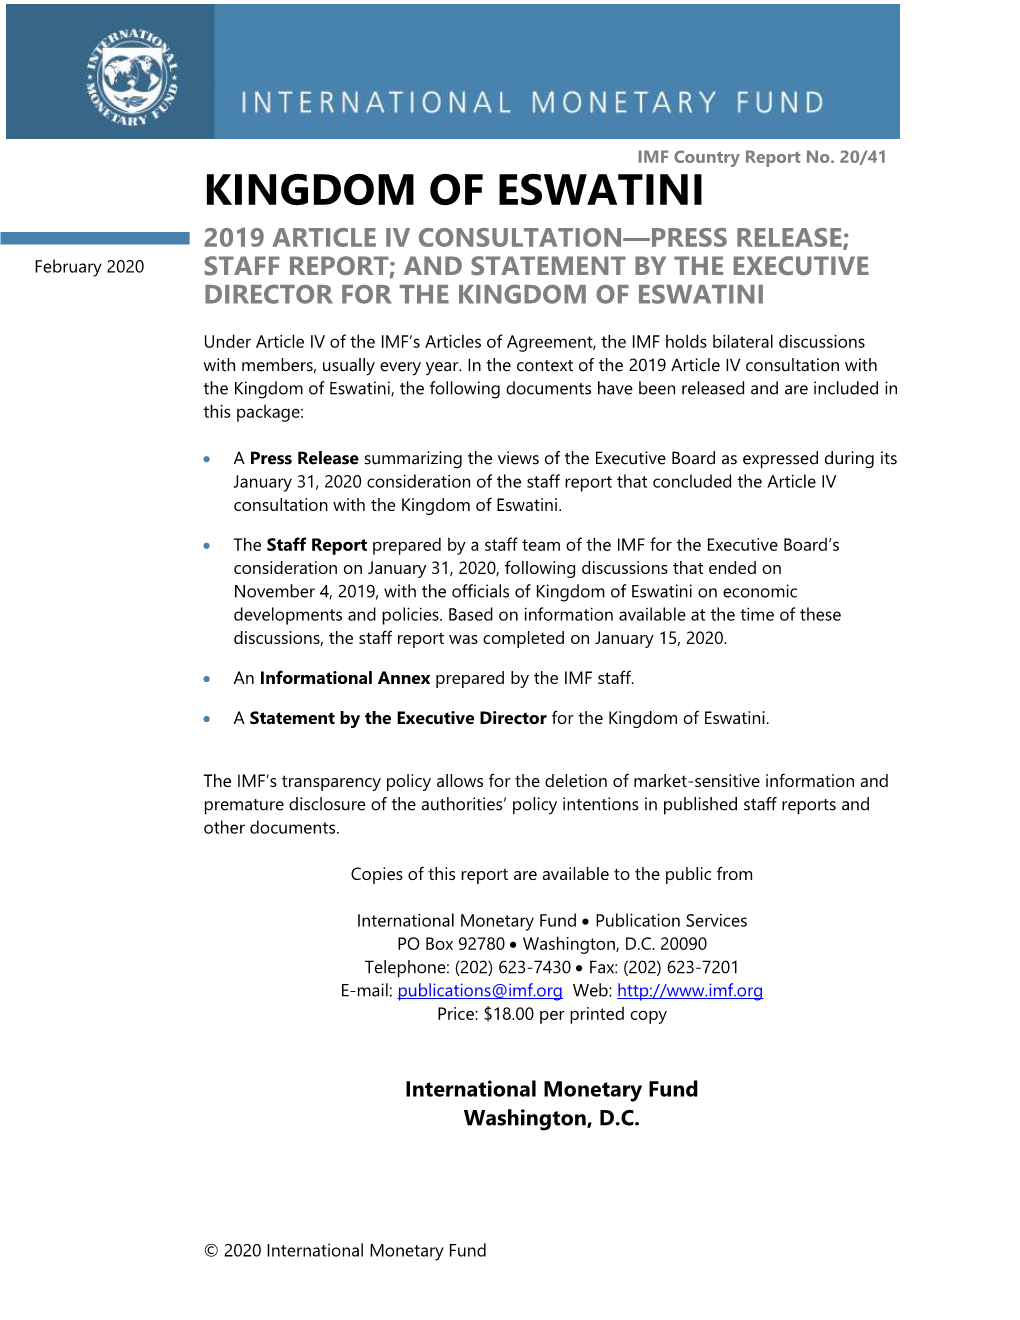 Kingdom of Eswatini: 2019 Article IV Consultation-Press